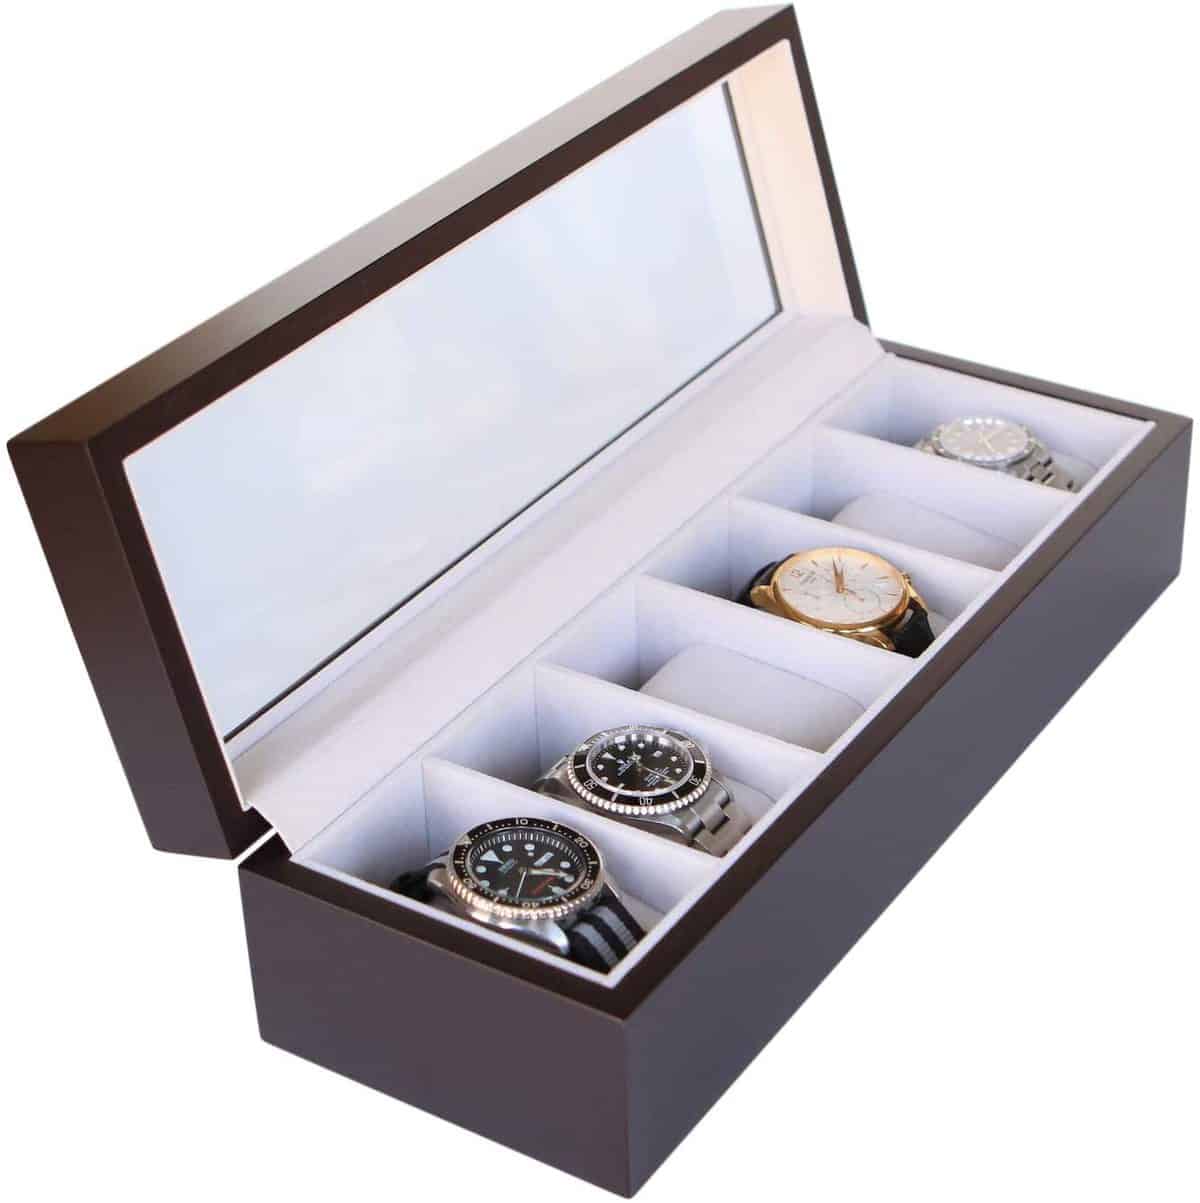 Case Elegance Boîte à montres en bois massif Organisateur